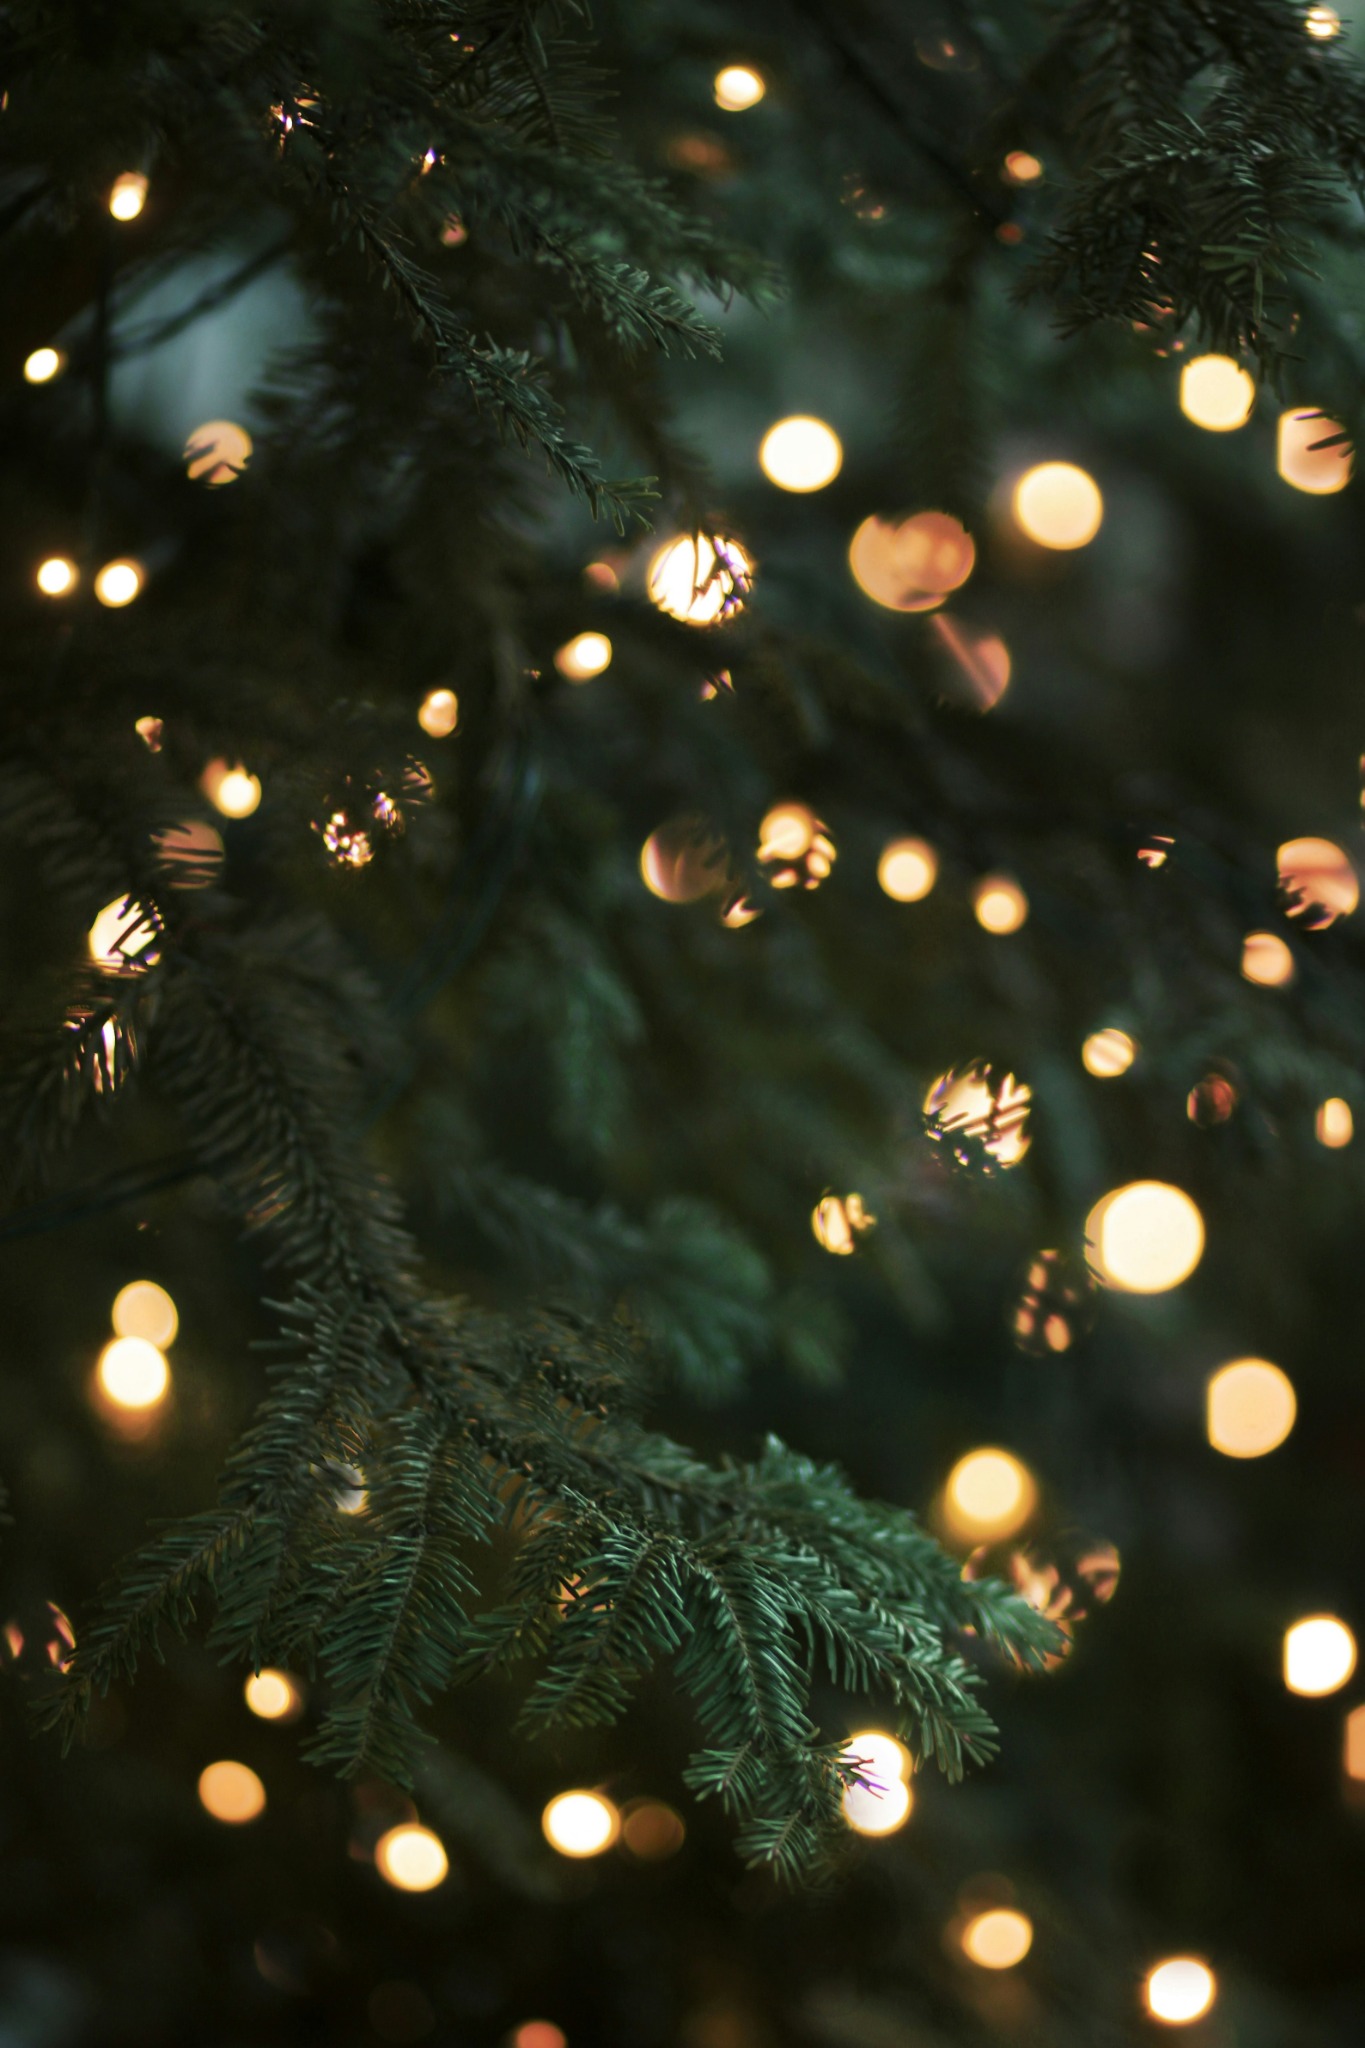 Dark christmas tree with lights